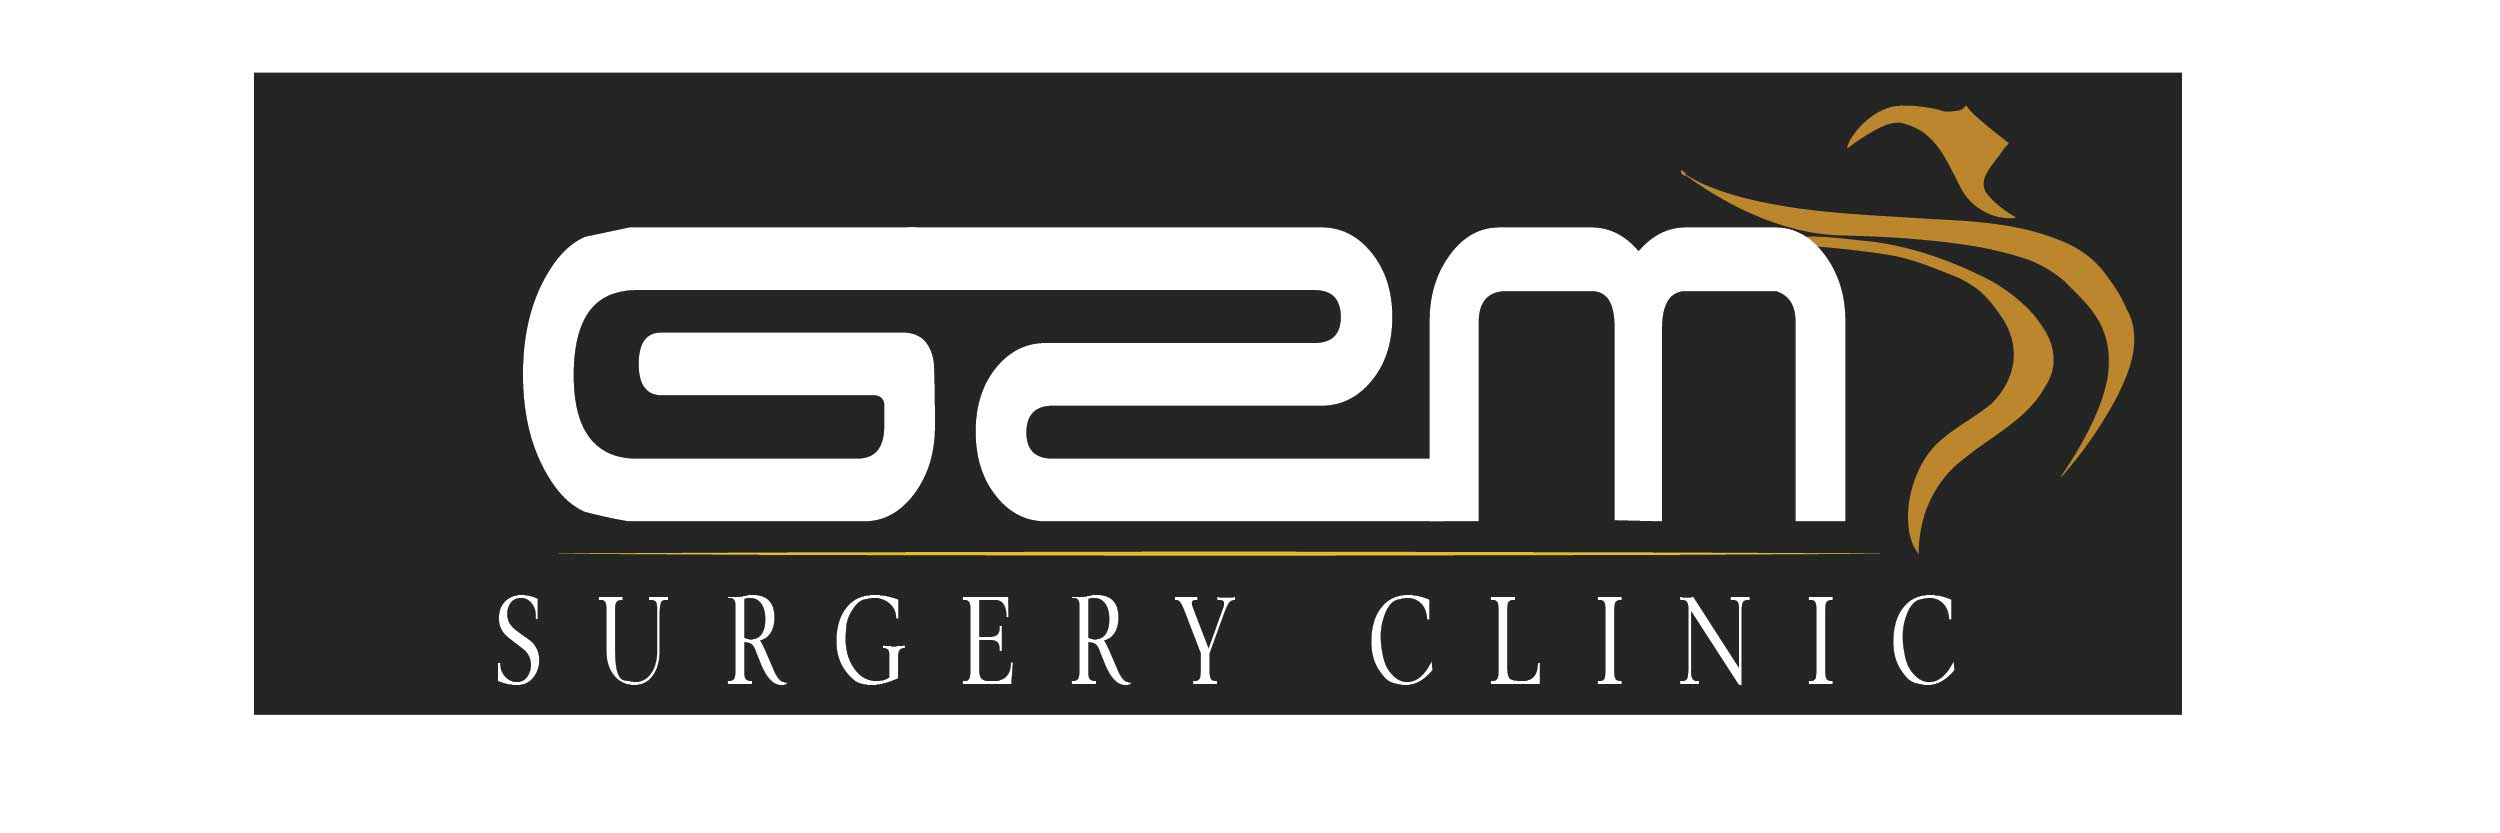 GSM Logo - GSM Clinic Logo | Orca Enterprise Solutions